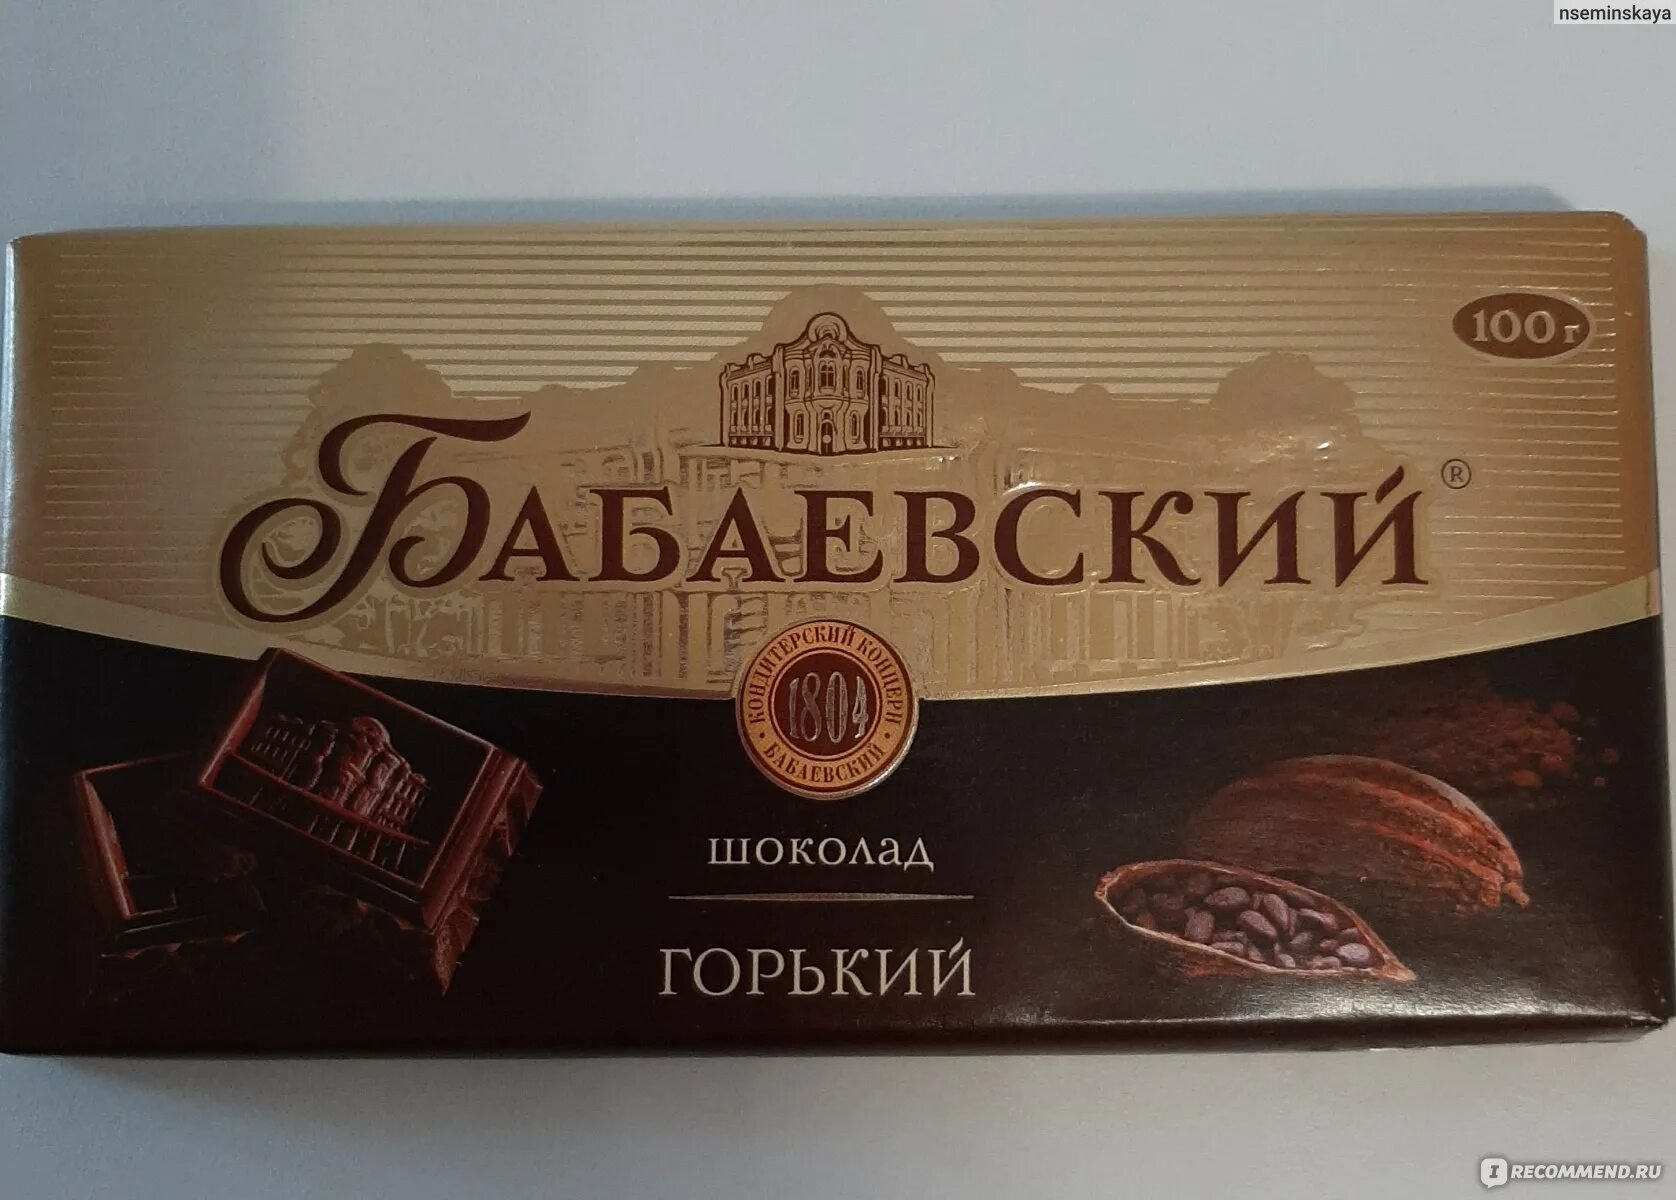 Шоколад бабаевский граммы